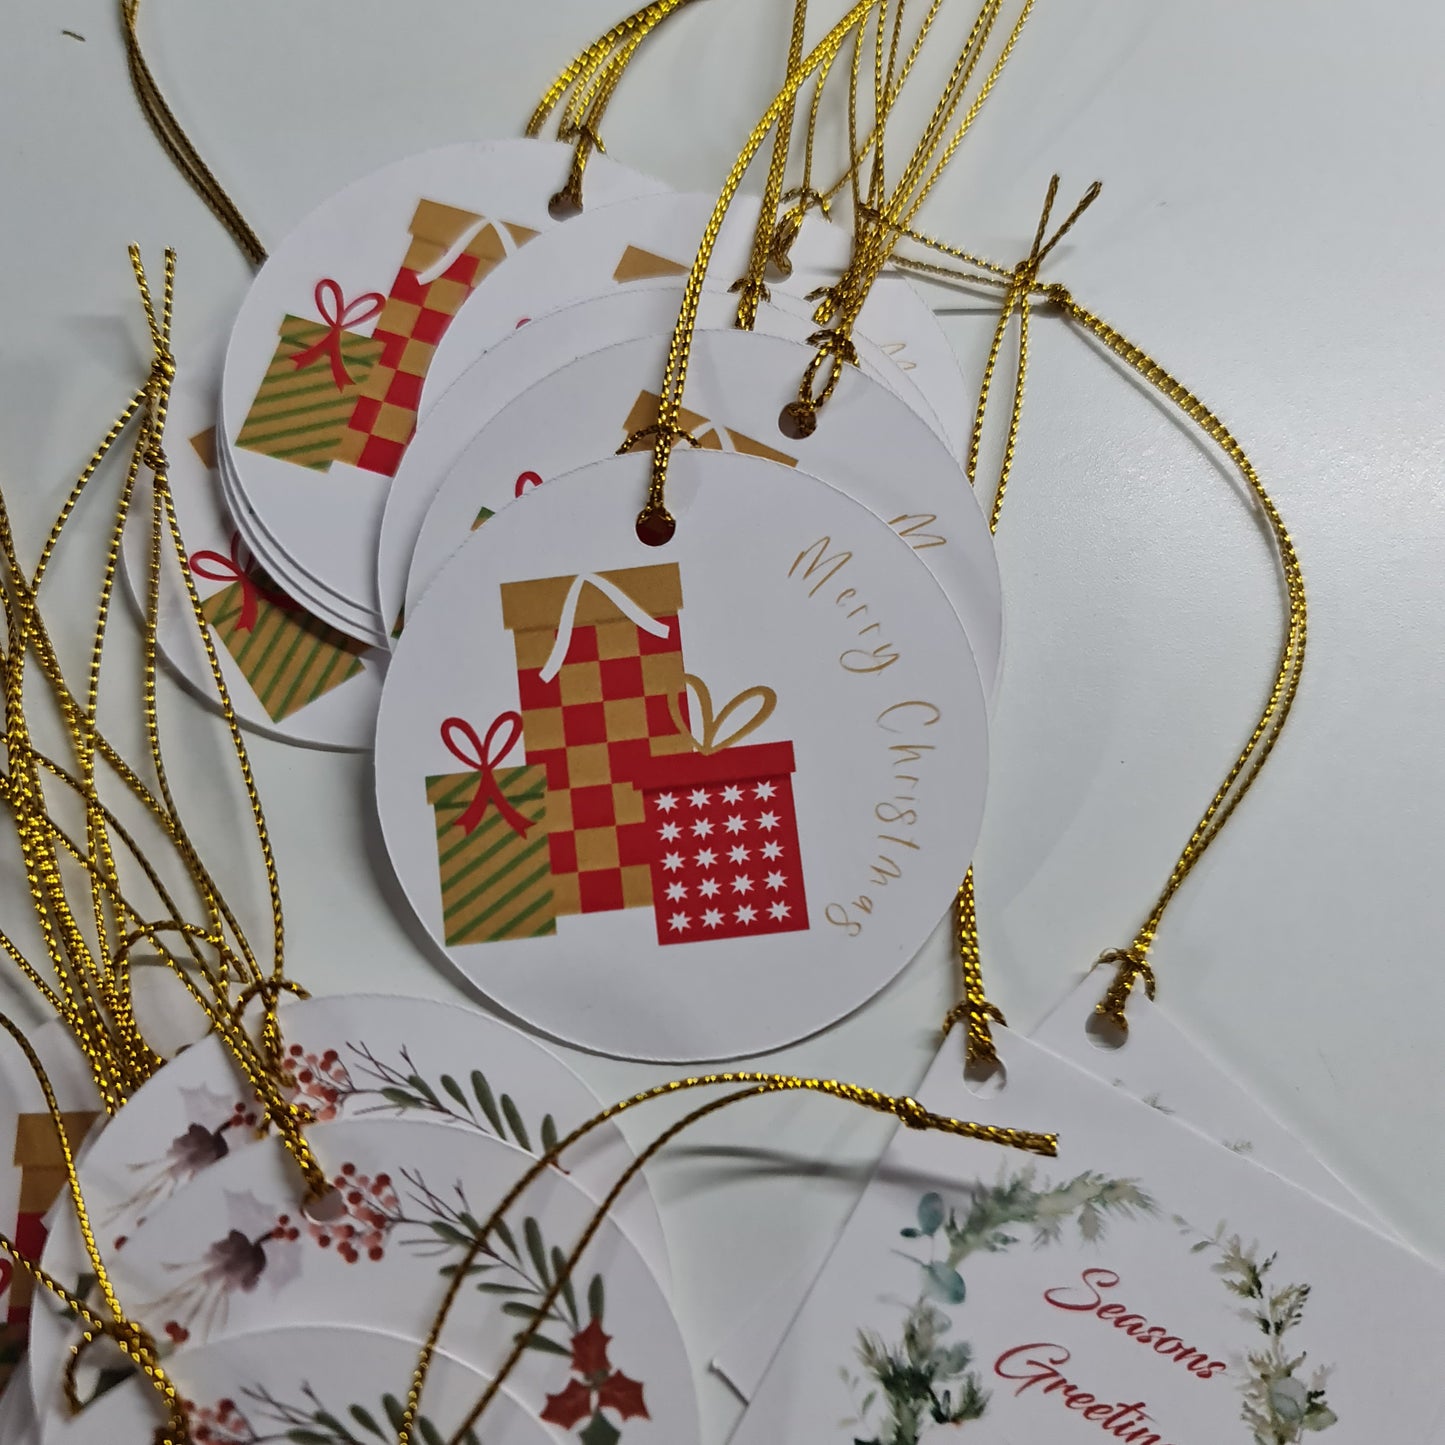 Christmas Gift Tags - Mixed Designs